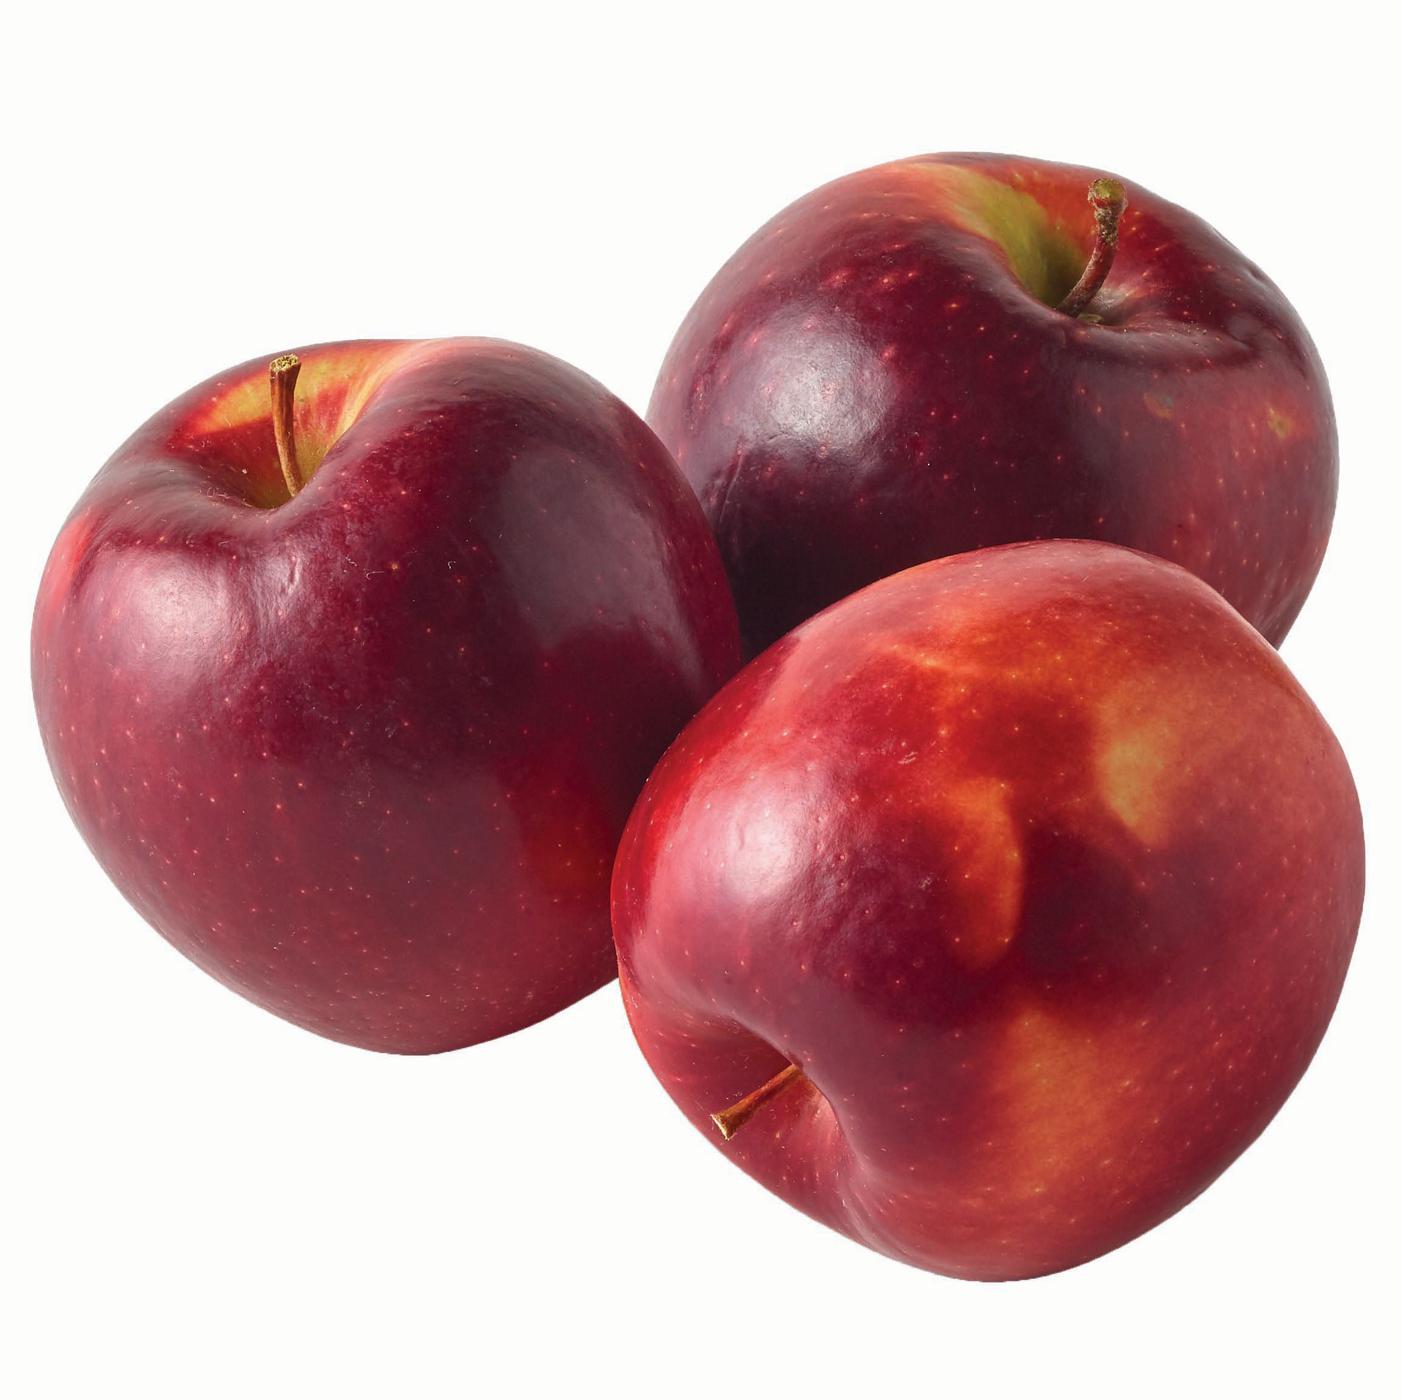 Fresh Cosmic Crisp Apple - Shop Apples at H-E-B